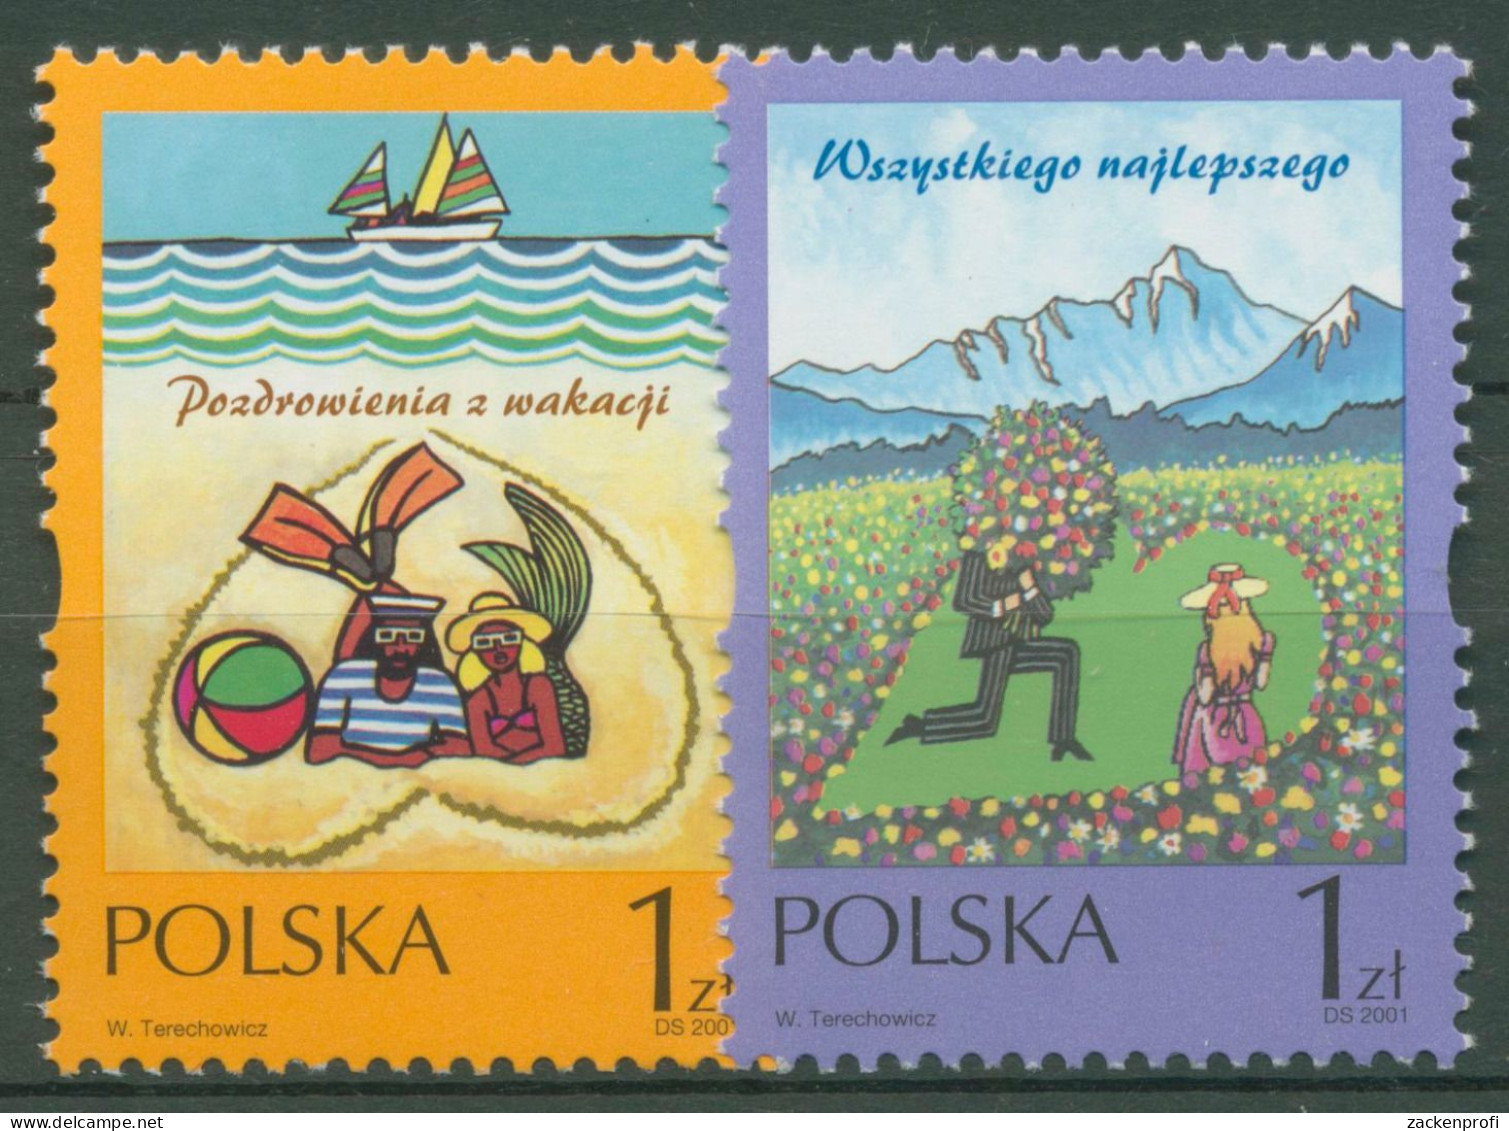 Polen 2001 Grußmarken 3887/88 Postfrisch - Ongebruikt